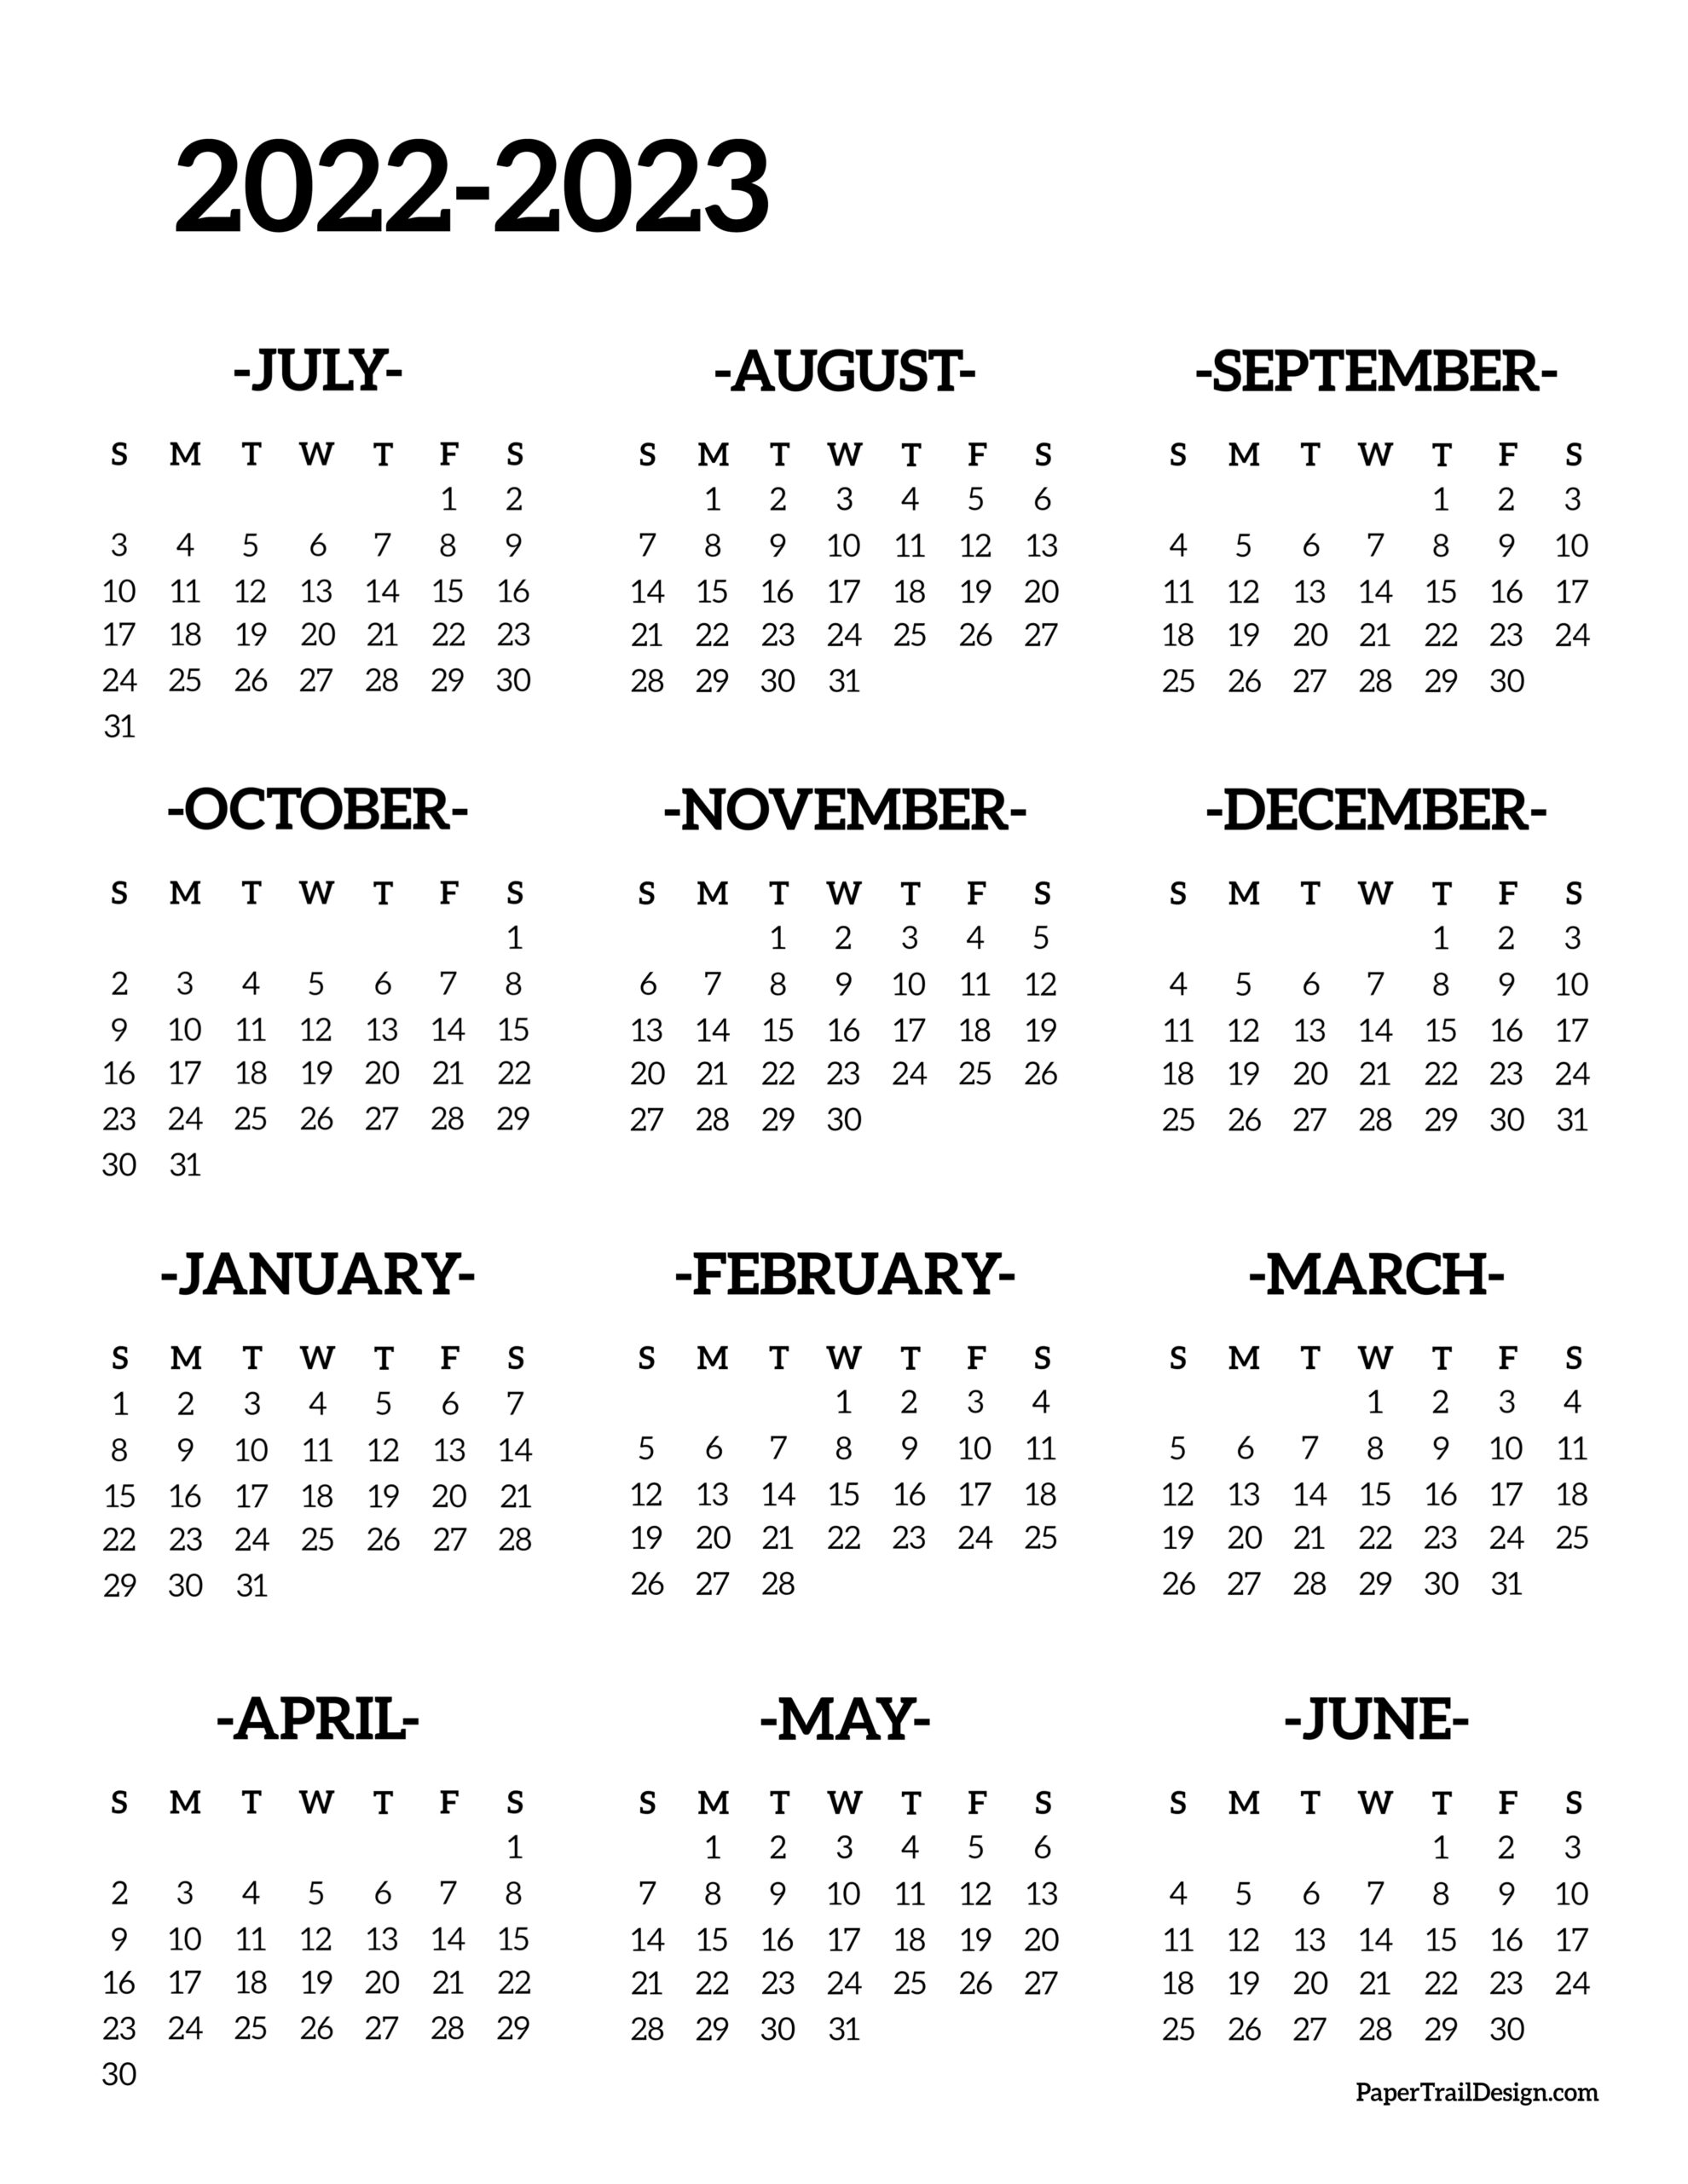 Free 2022 2023 Calendar 2022-2023 School Year Calendar Free Printable - Paper Trail Design